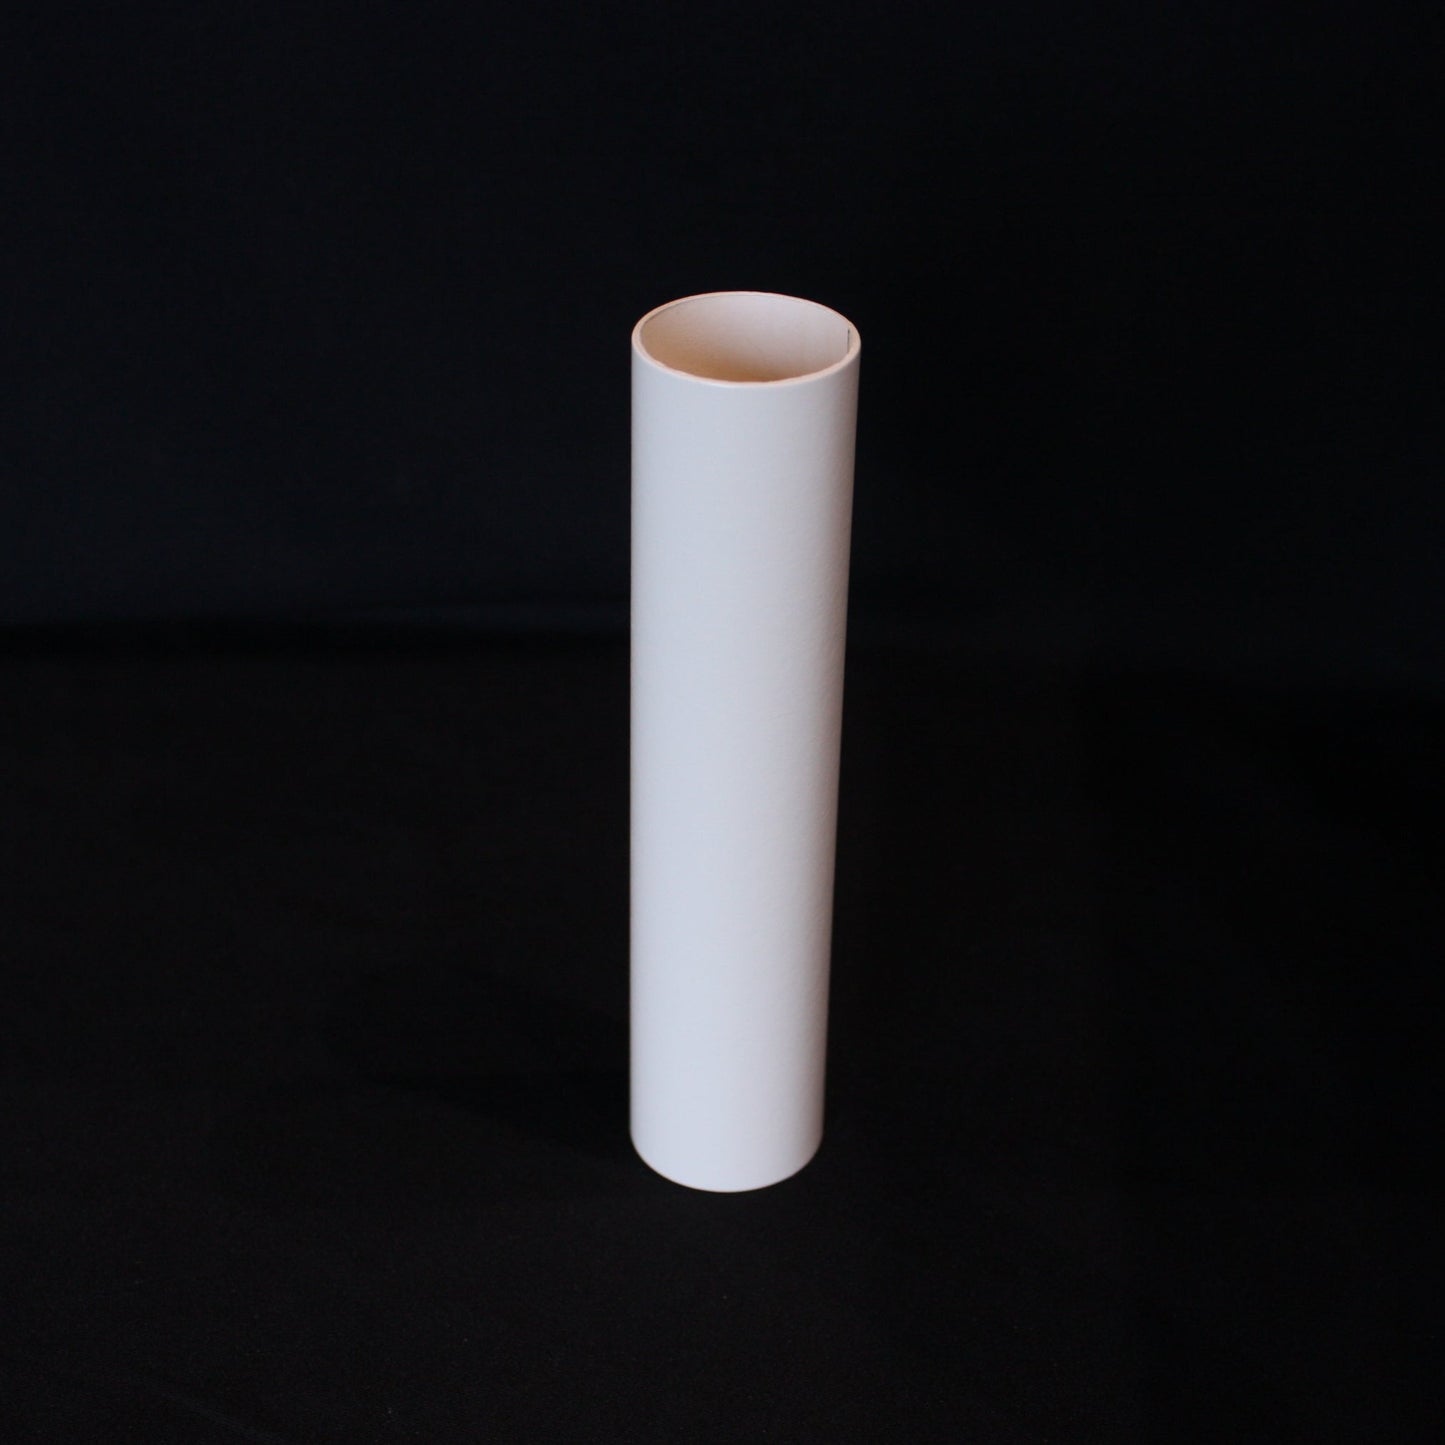 6" Ivory Cardboard Candle Cover, Medium Base